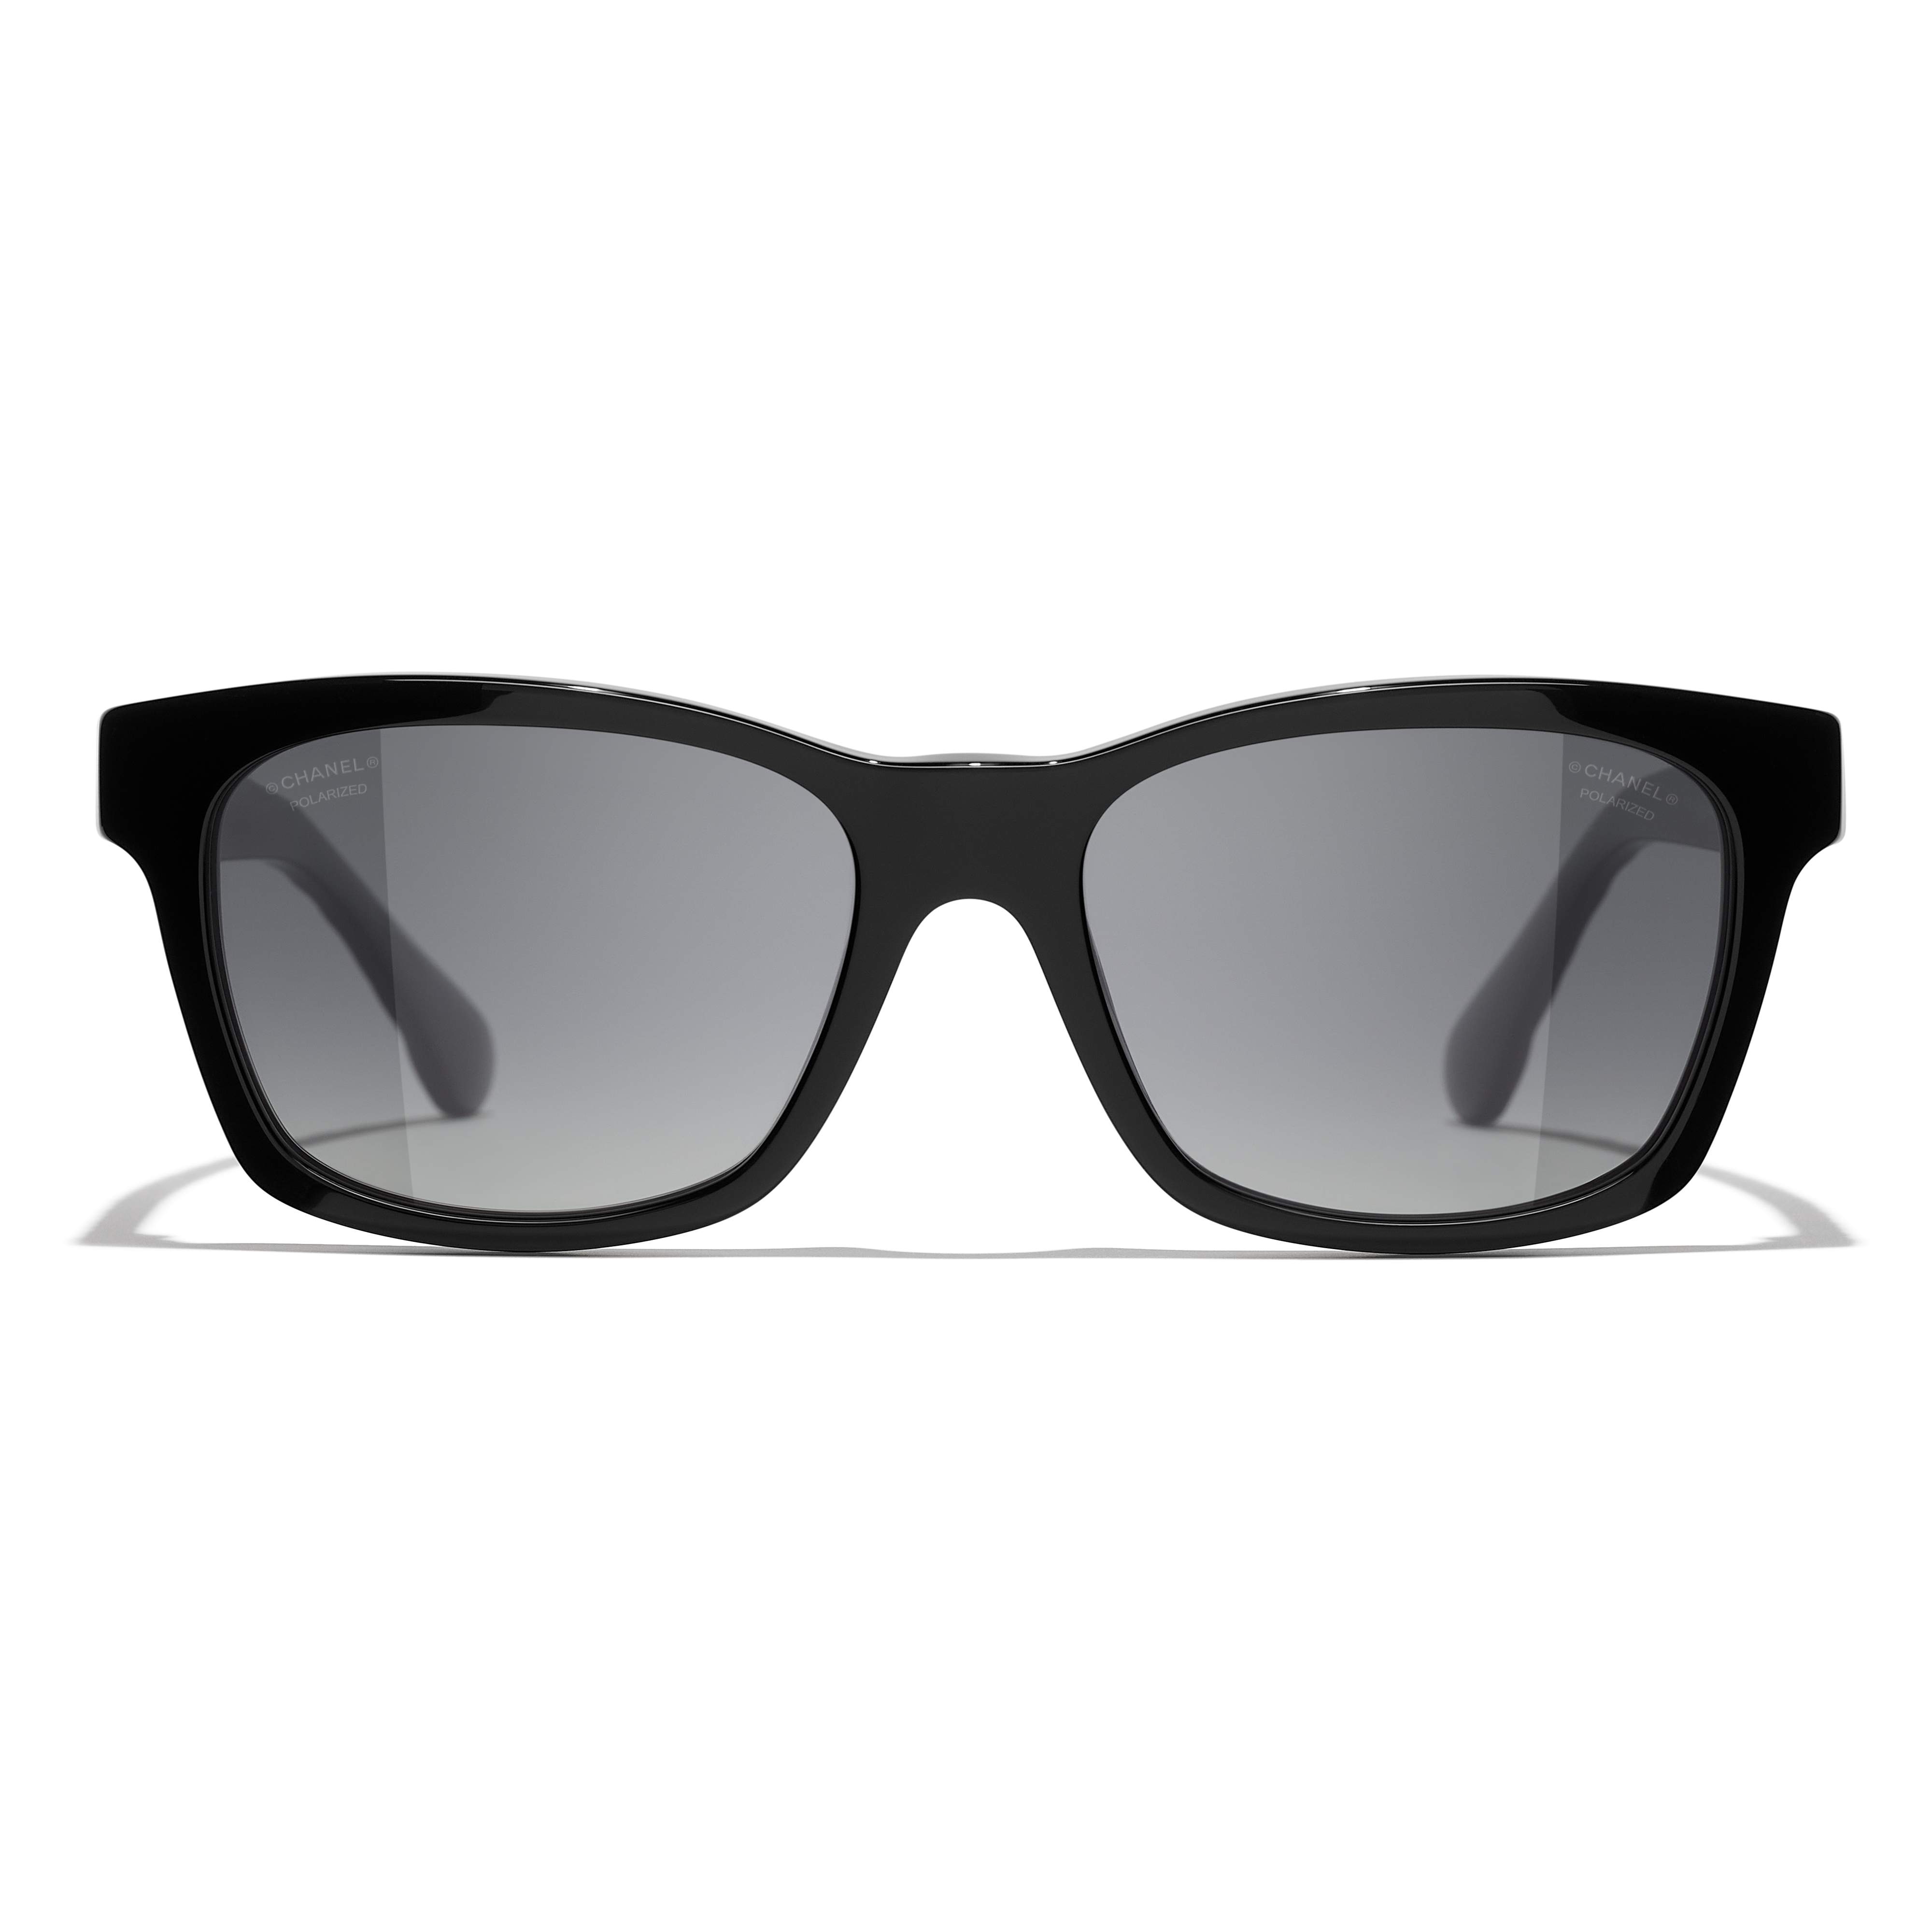 Chanel 5484 C760/S8 Sunglasses - US